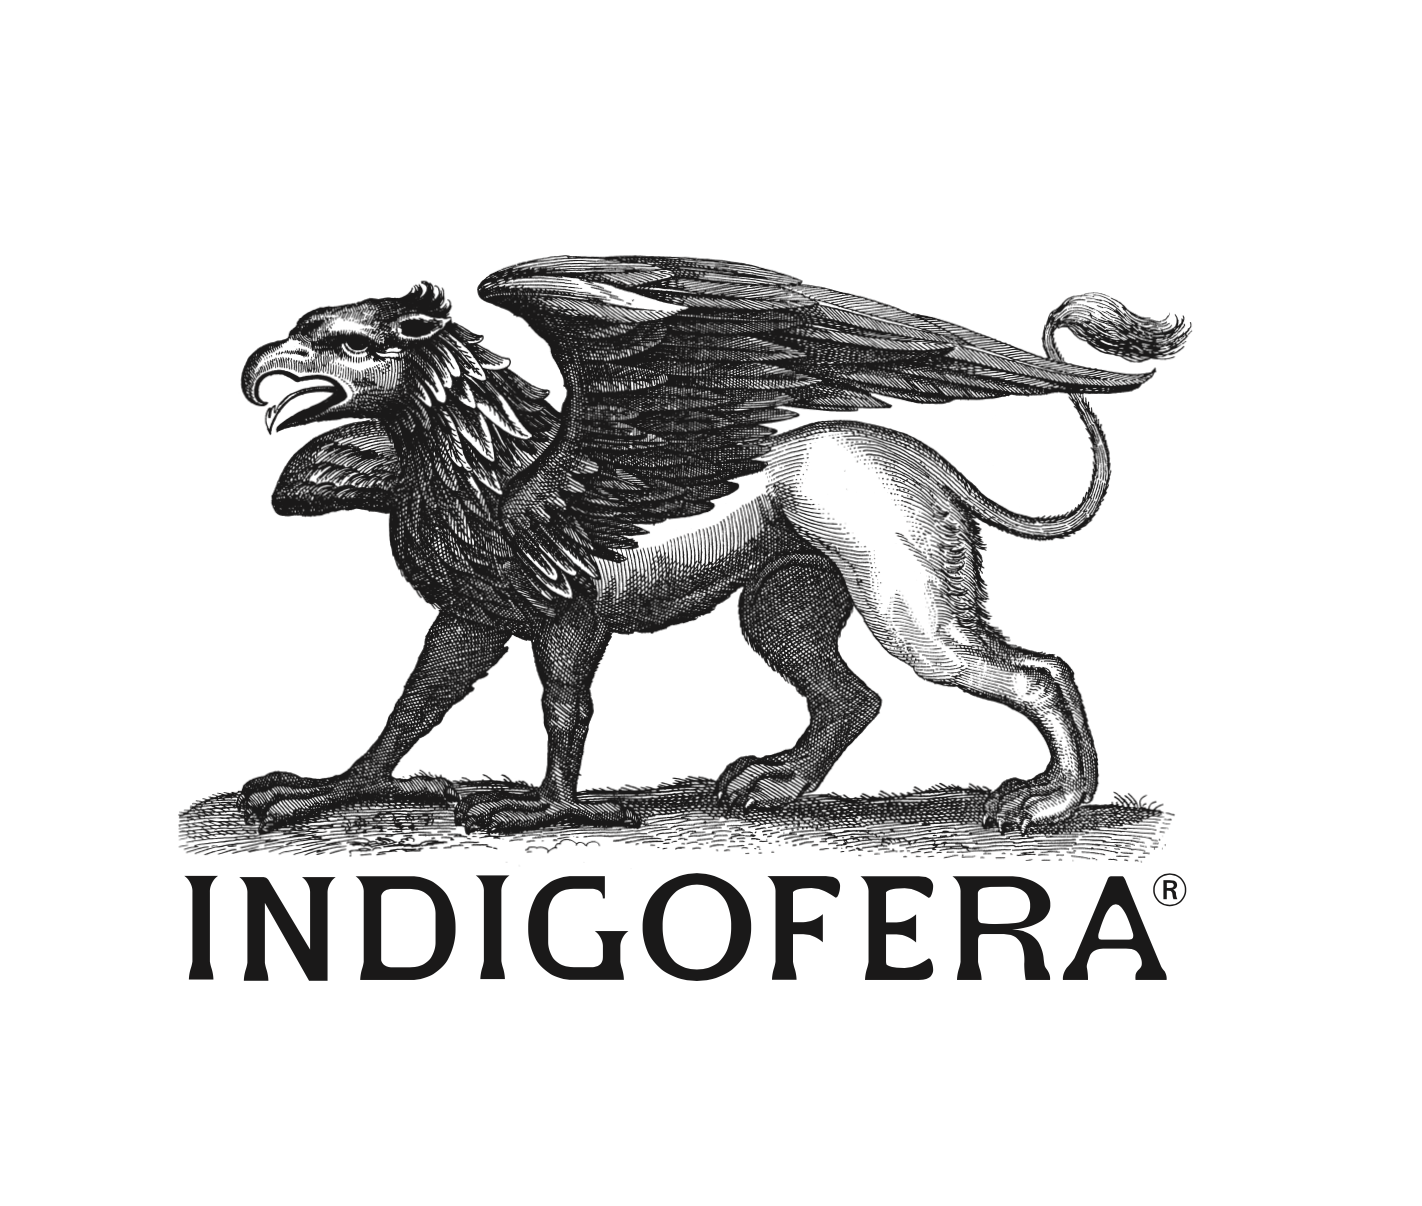 Indigofera - Made in Portugal